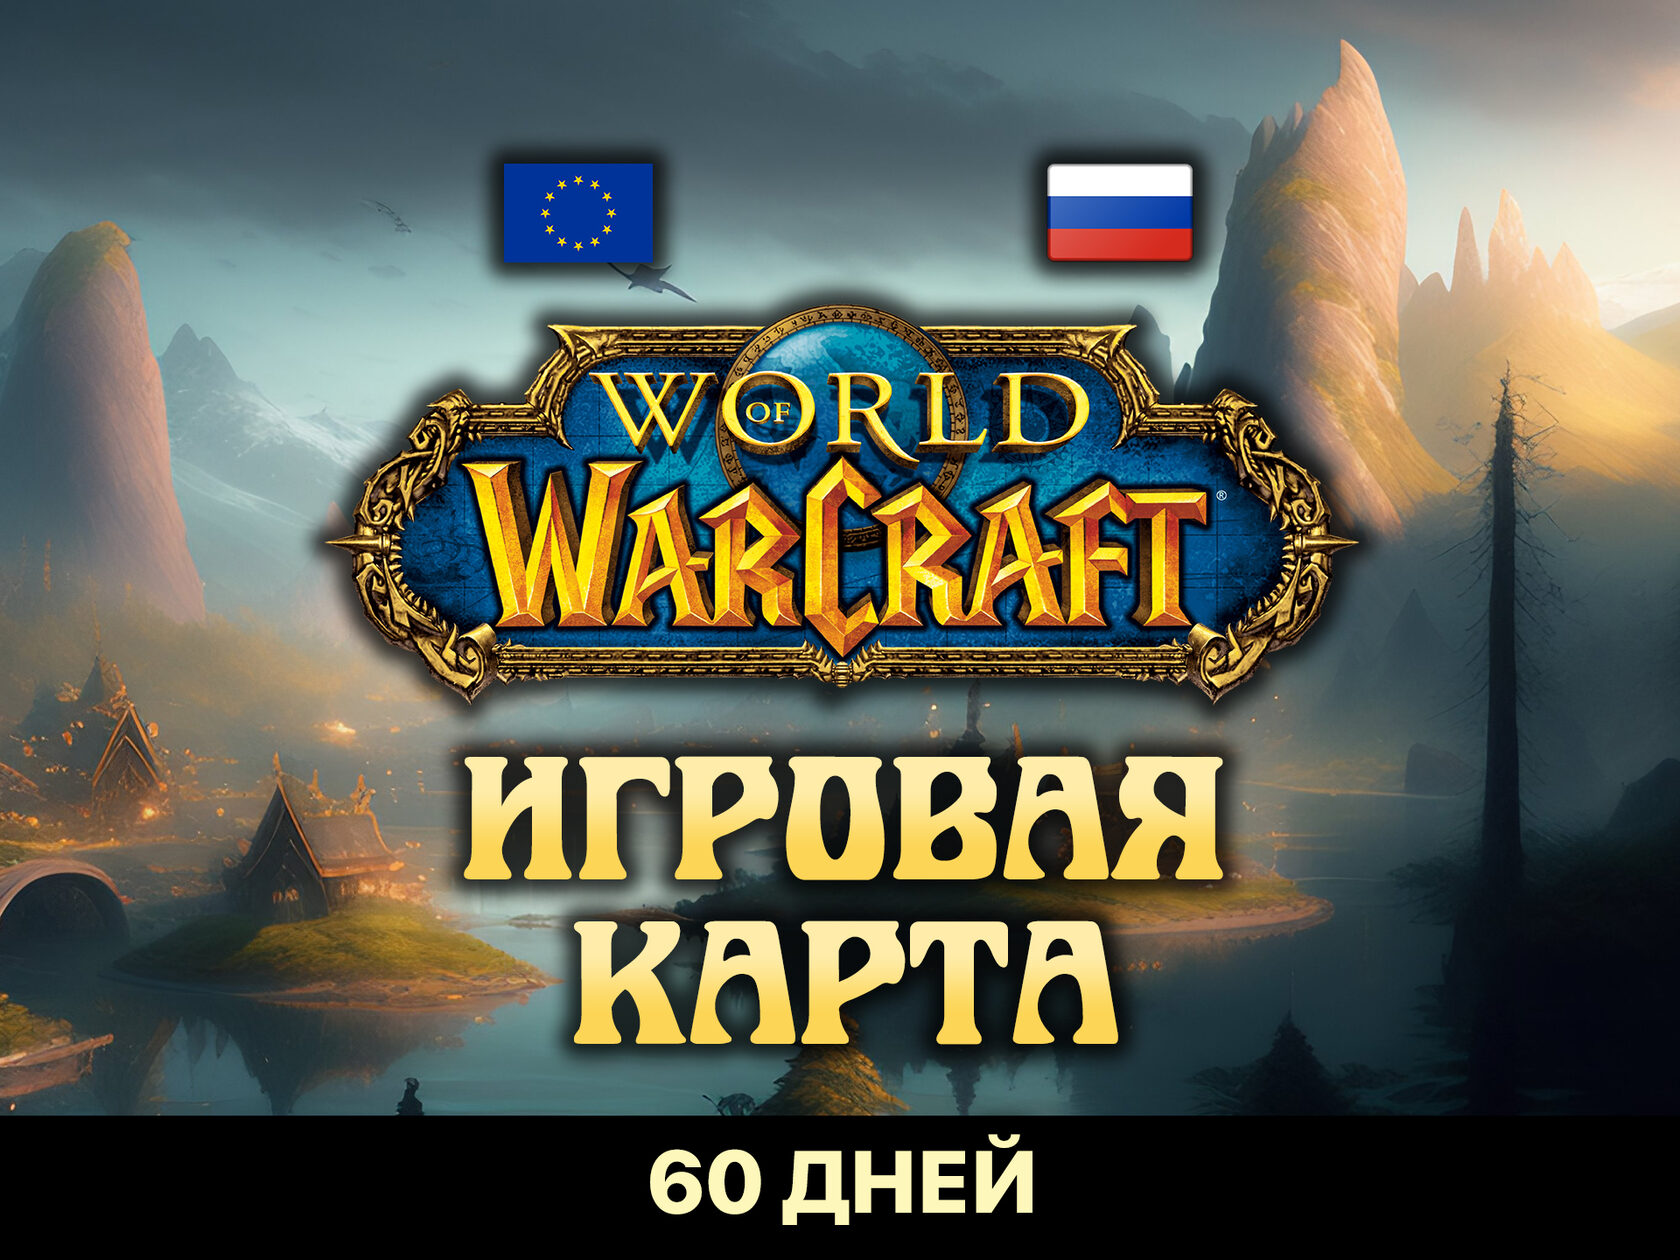 Игра wow 60. Тайм карта wow 60. Тайм карта wow. Warcraft подписка. Eu/ru тайм карта wow 60 дней подписки.